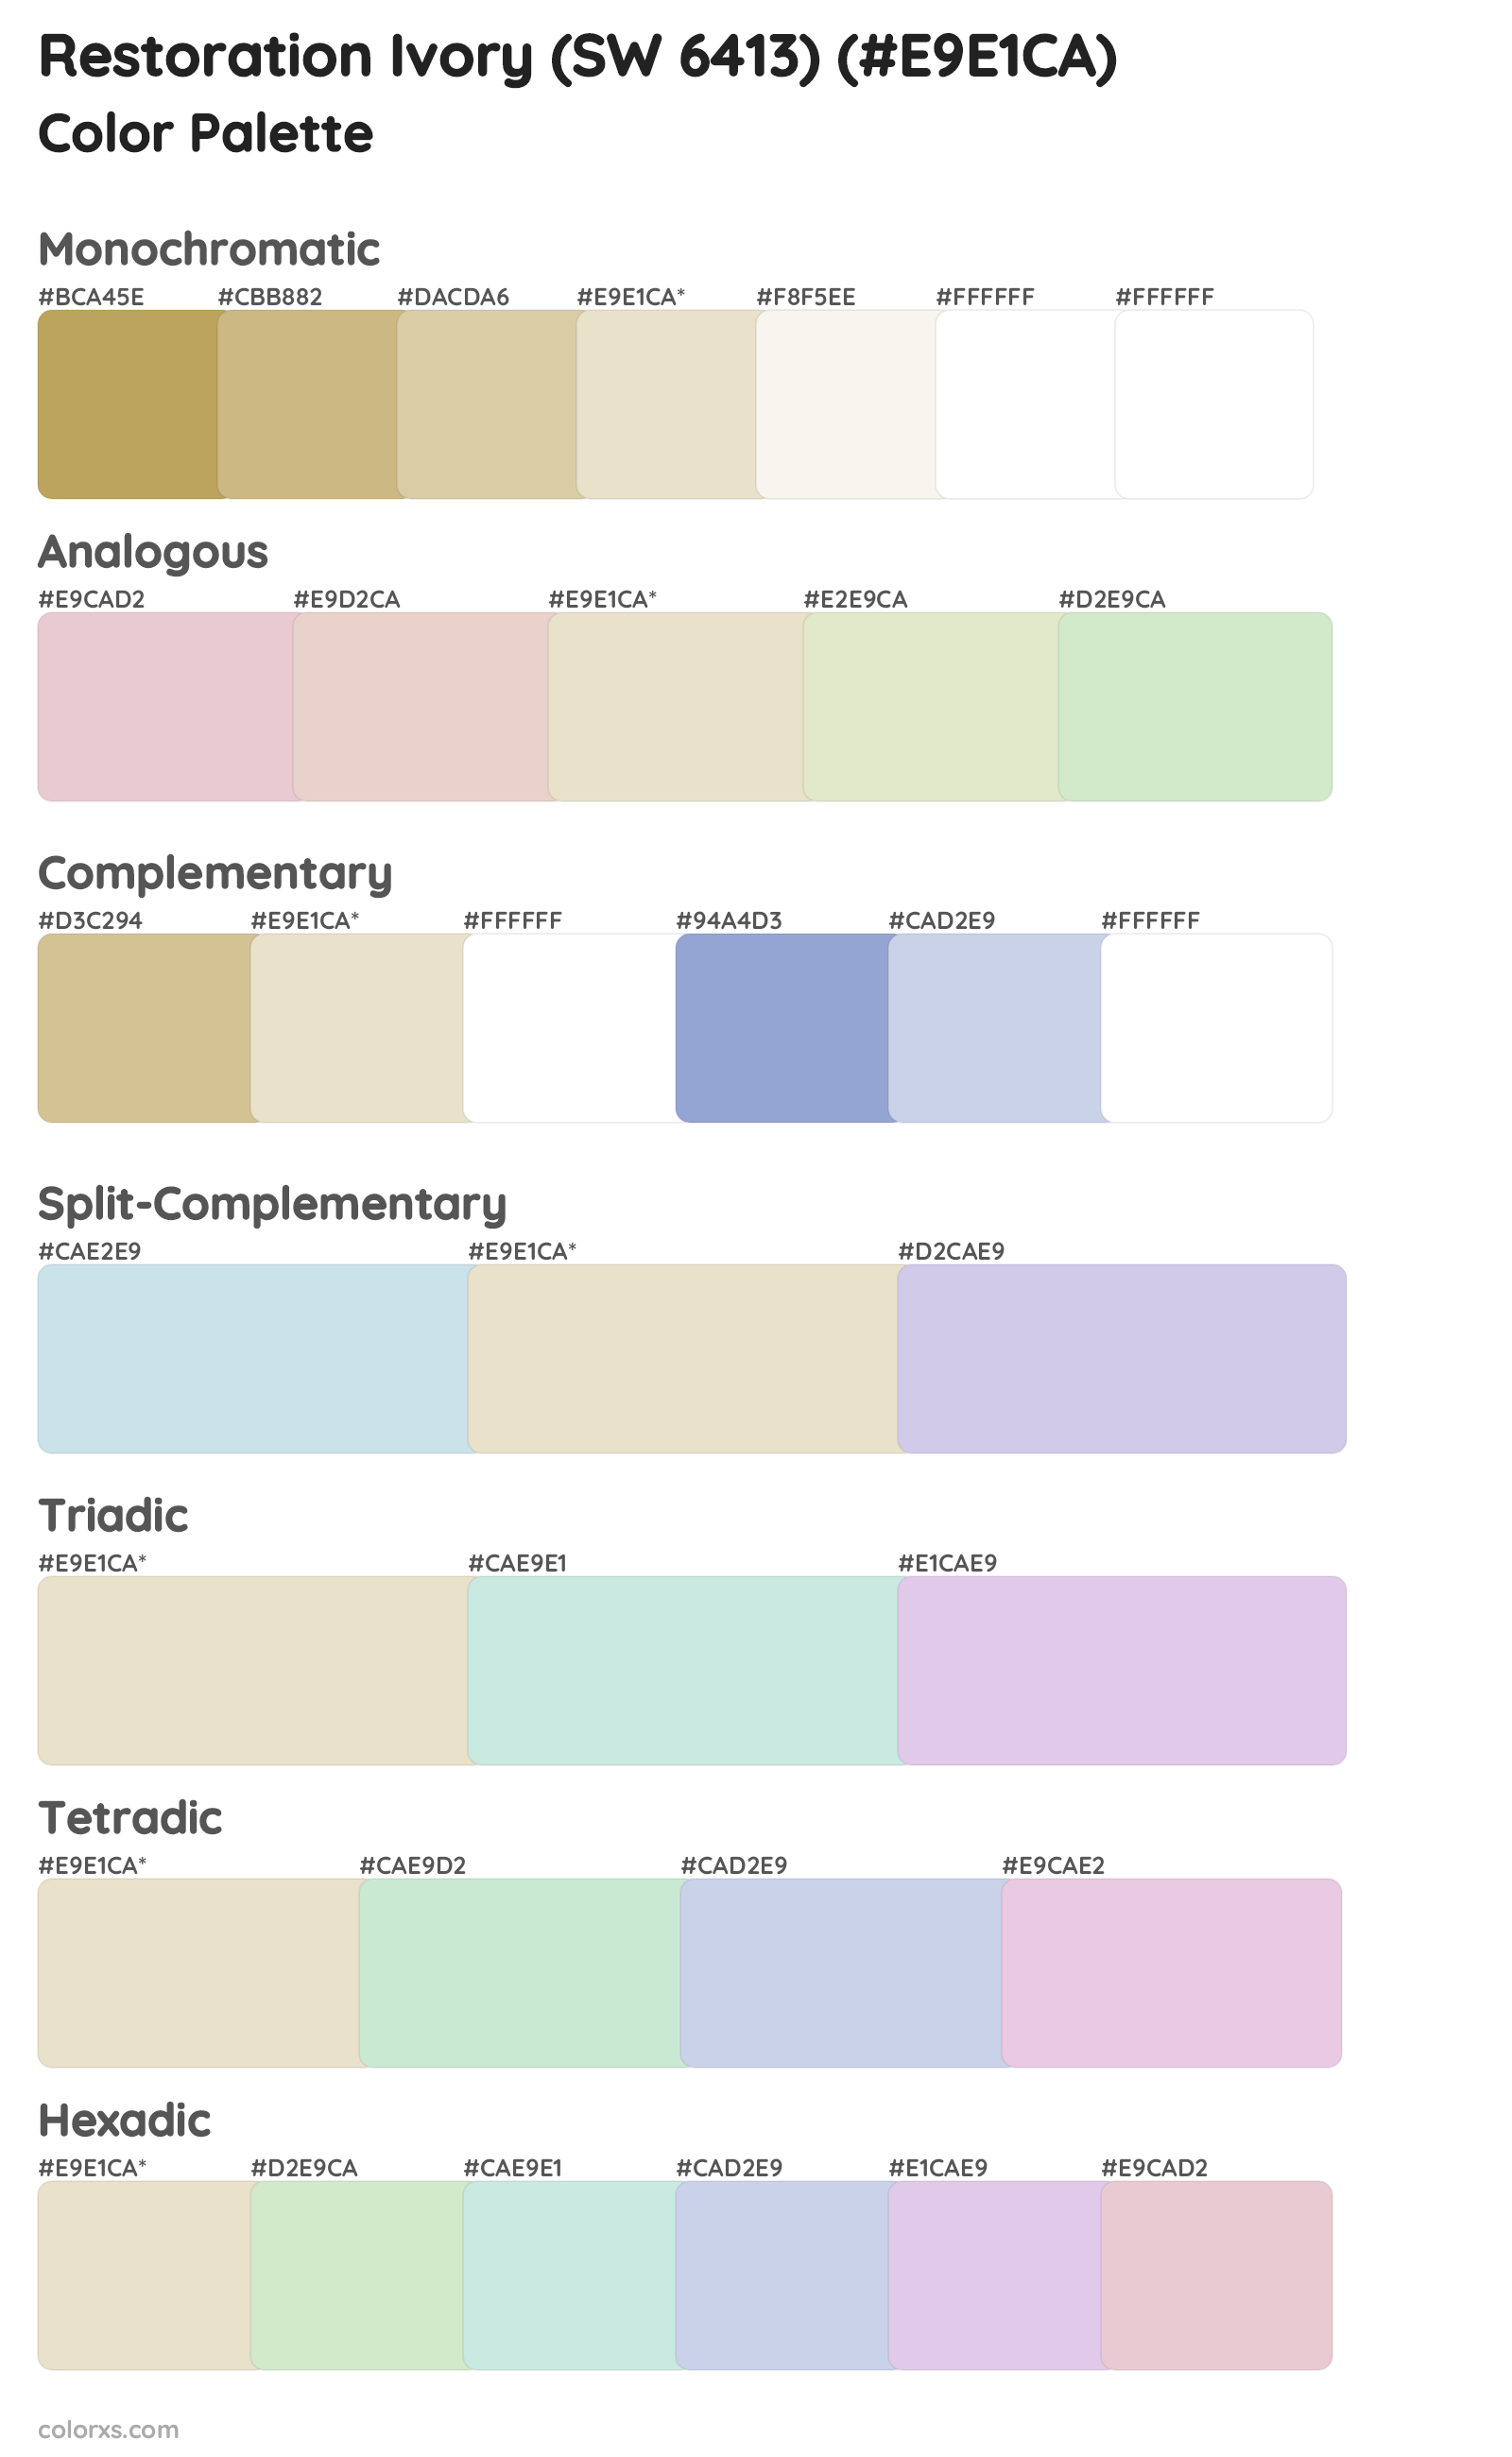 Restoration Ivory (SW 6413) Color Scheme Palettes